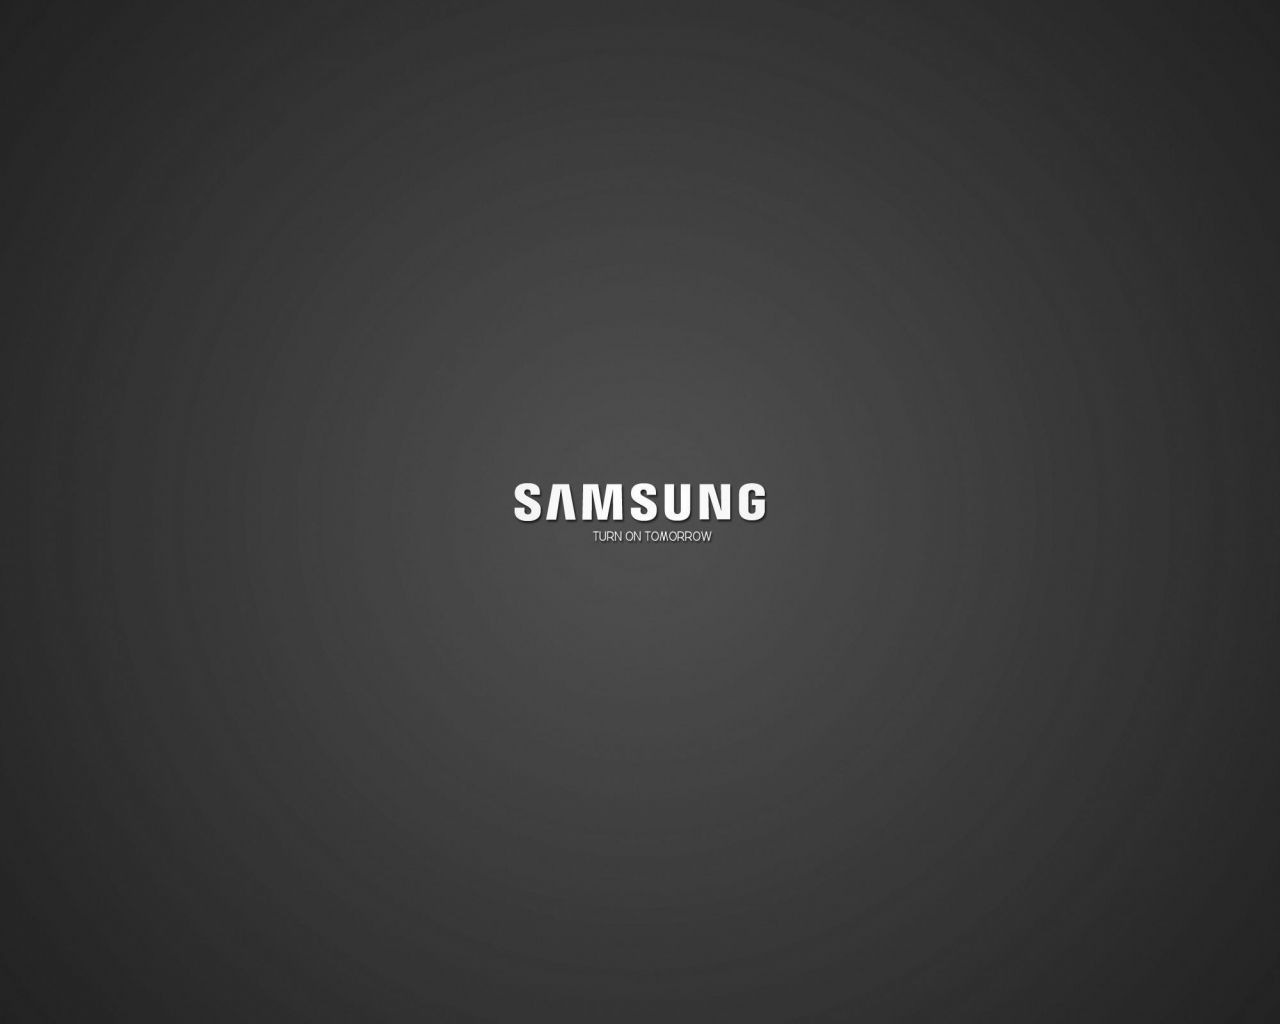 Free download Samsung Logo Wallpaper [2560x1600] for your Desktop, Mobile & Tablet. Explore Samsung Galaxy Logo Wallpaper. Samsung Galaxy Logo Wallpaper, Samsung Galaxy Wallpaper, Samsung Galaxy Wallpaper